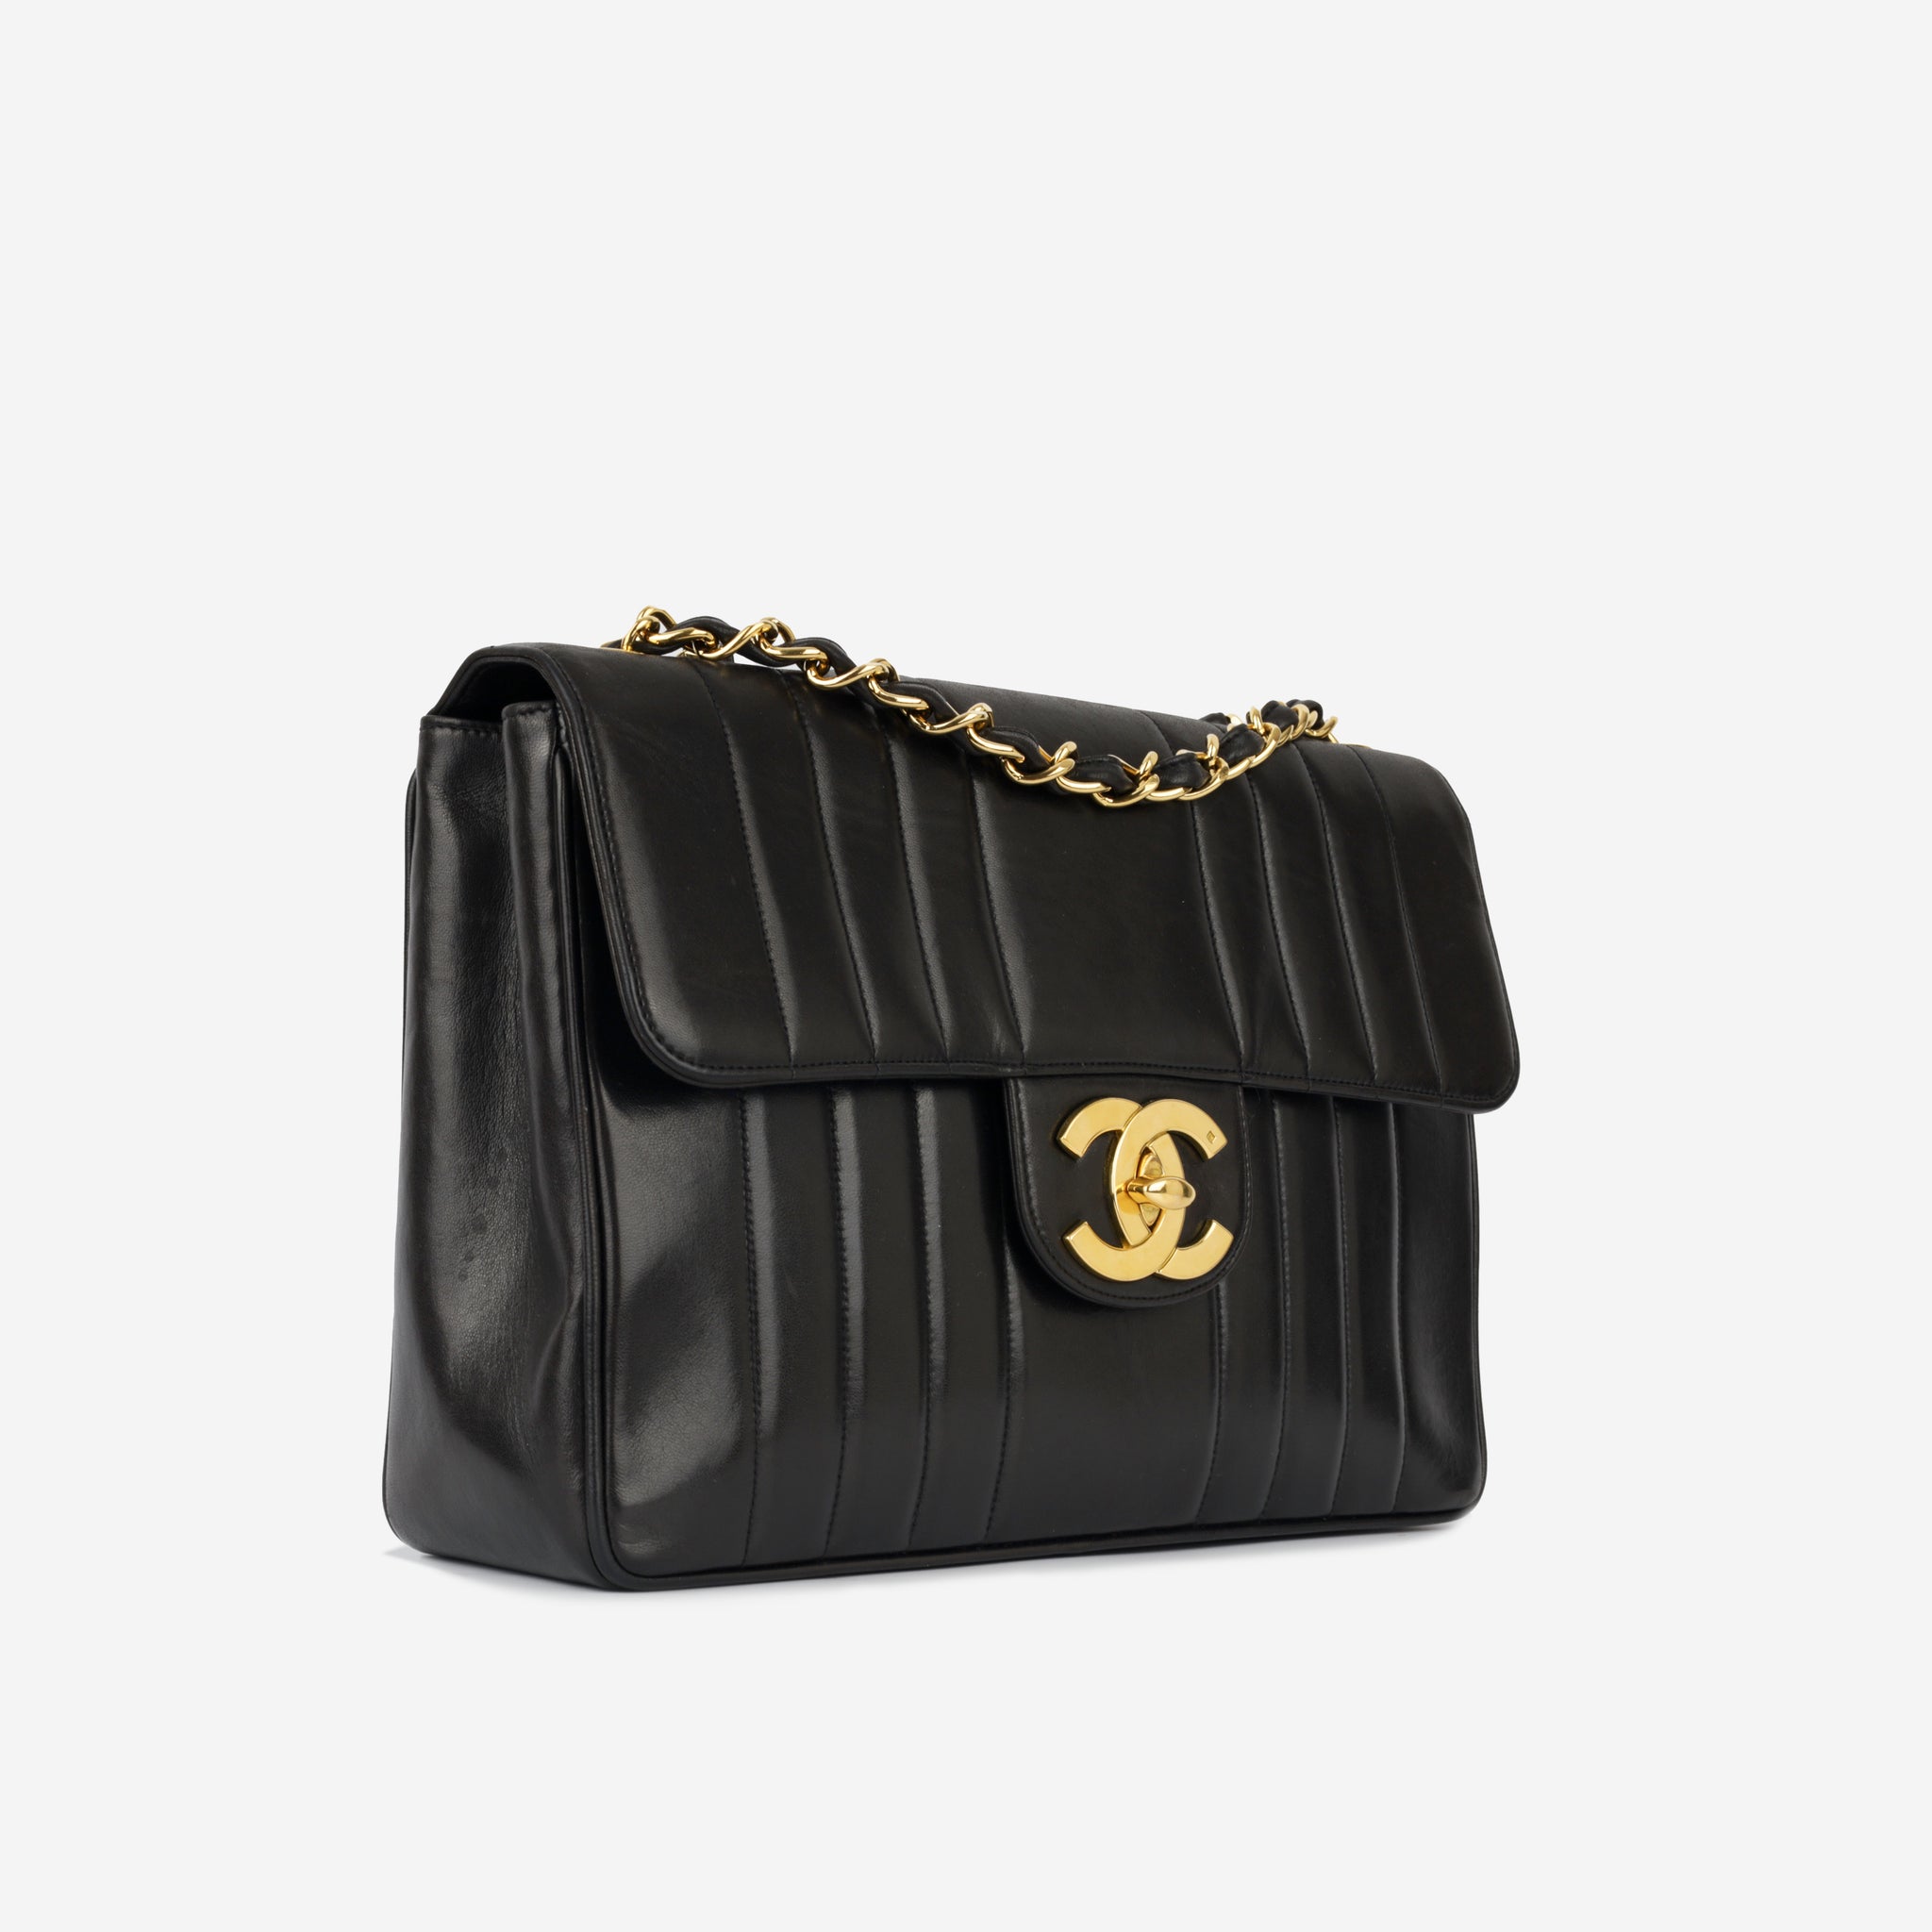 Vintage Chanel Mademoiselle Flap Bag